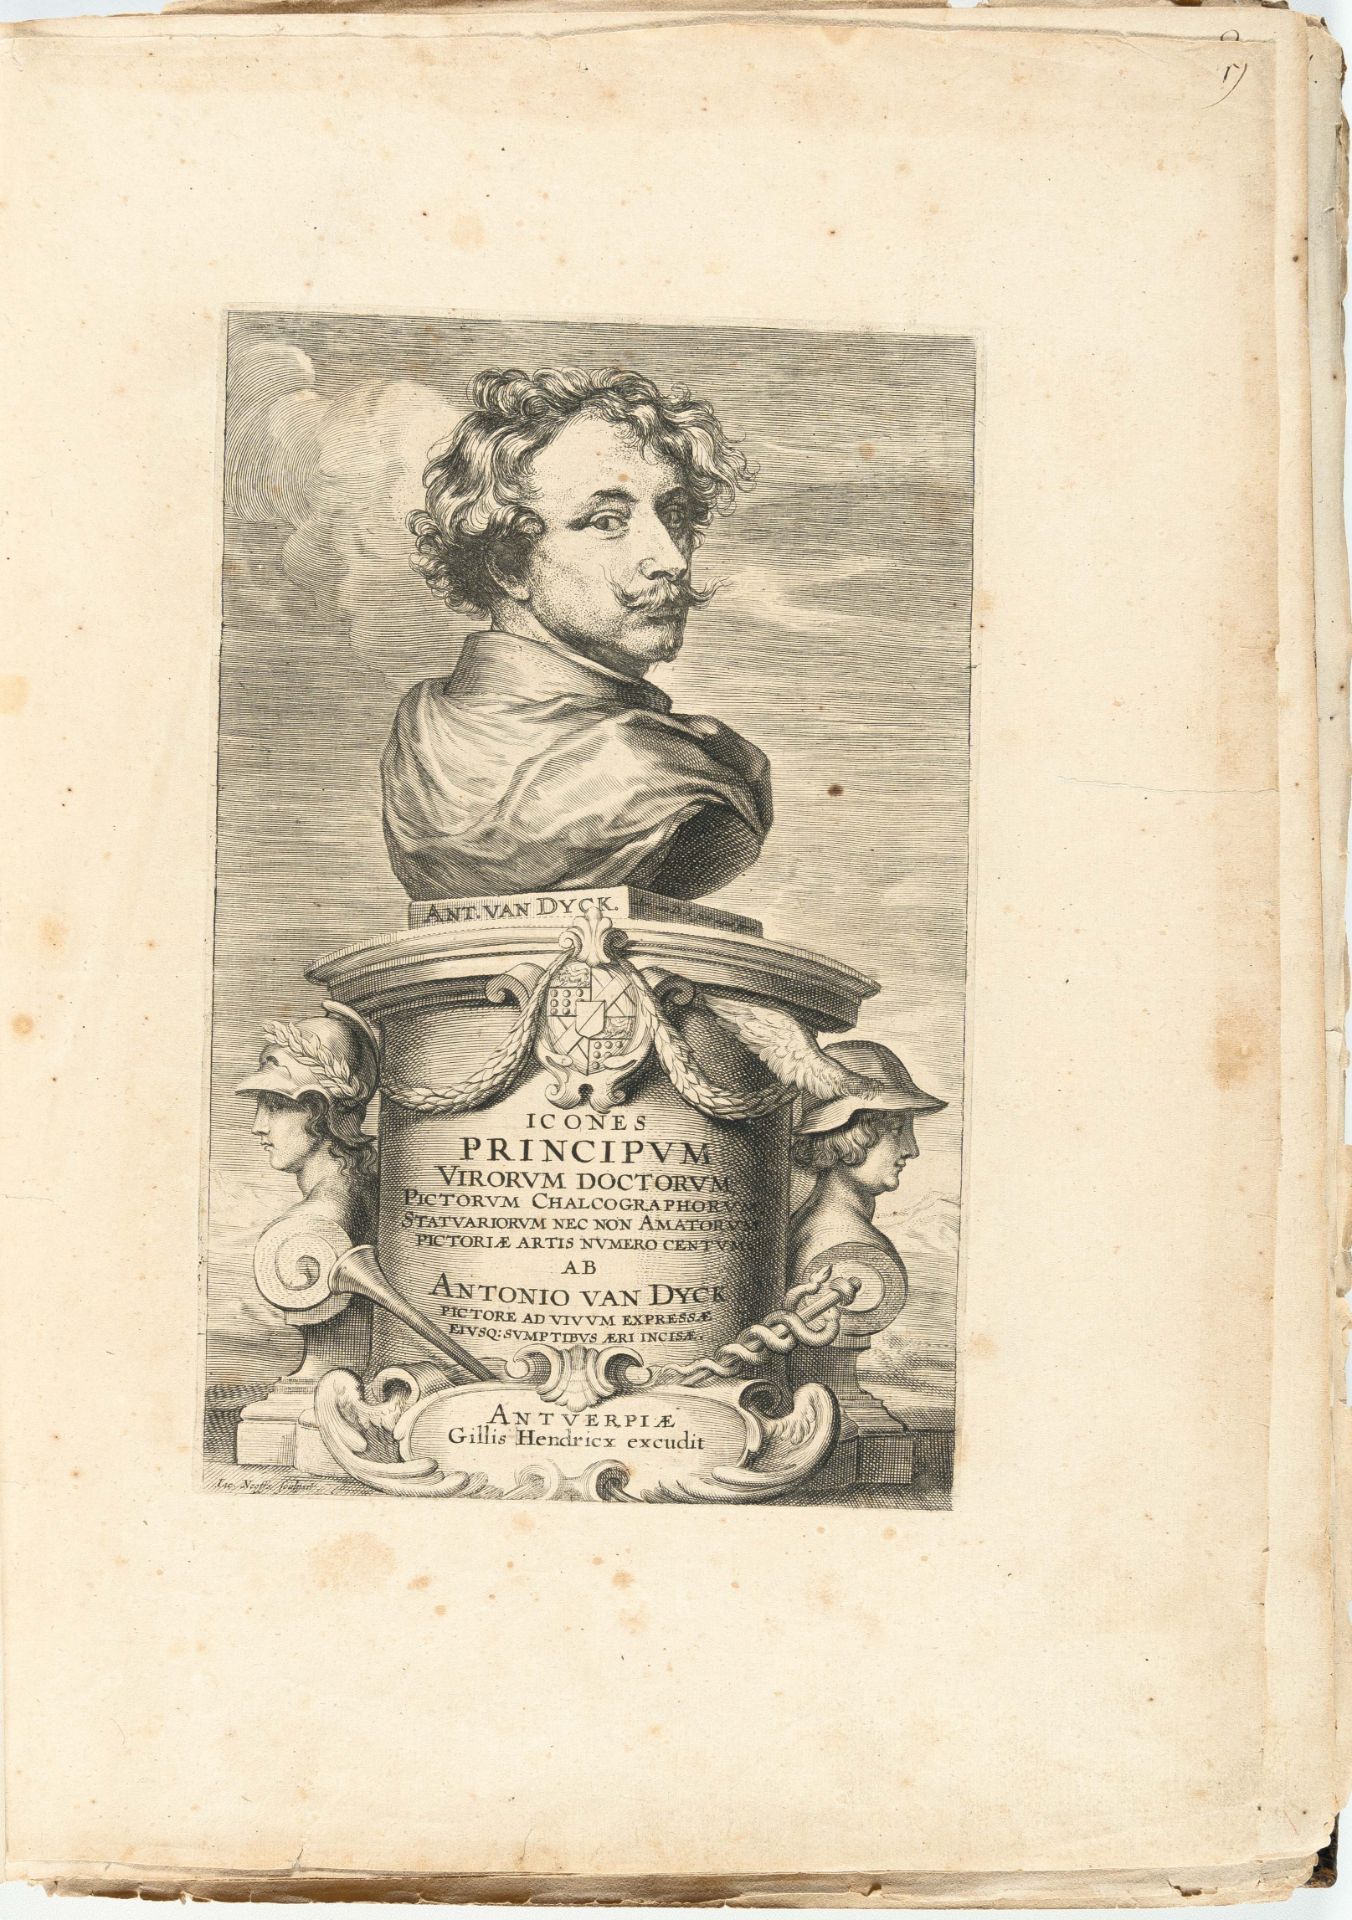 Anthonis van Dyck – Folge von 86 Bll.: Icones Principum Virorum Doctorum, Pictorum Chalcographorum S - Bild 11 aus 12